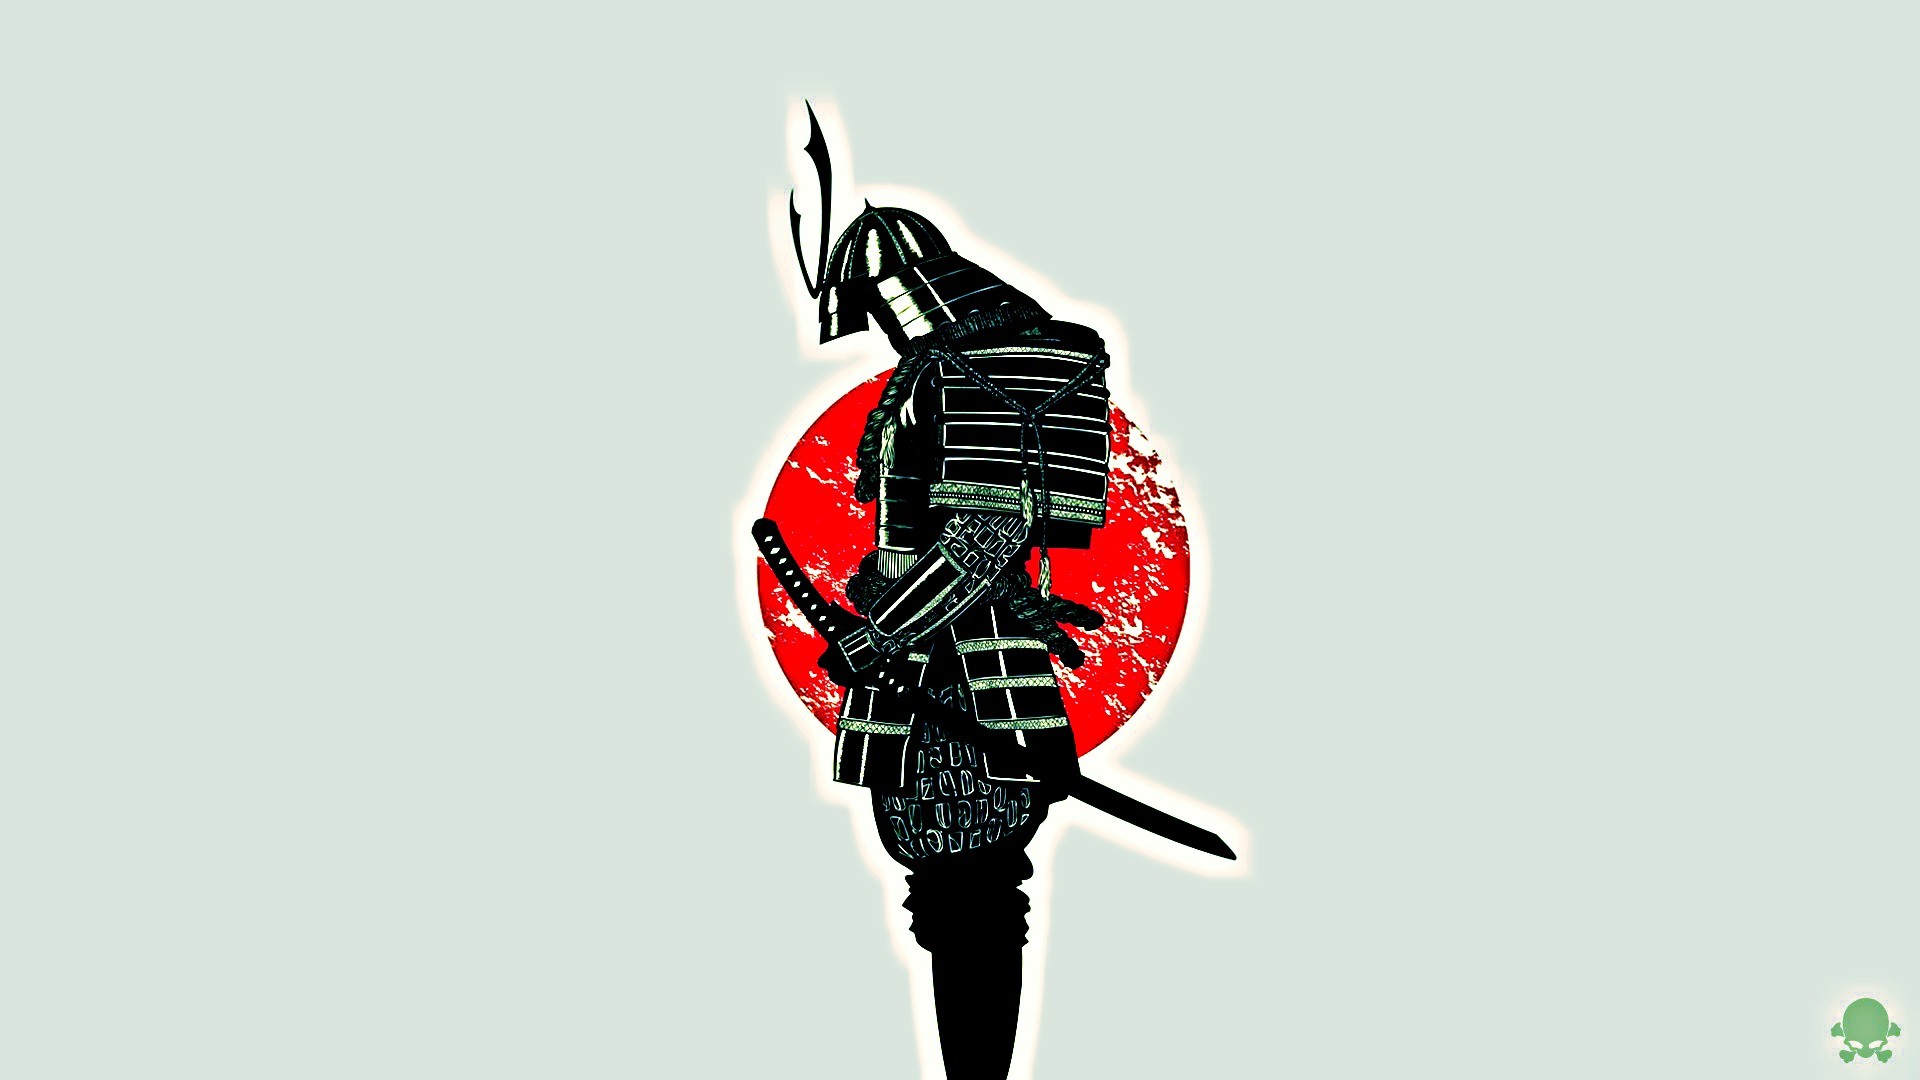 General 1920x1080 samurai minimalism Japan flag simple background